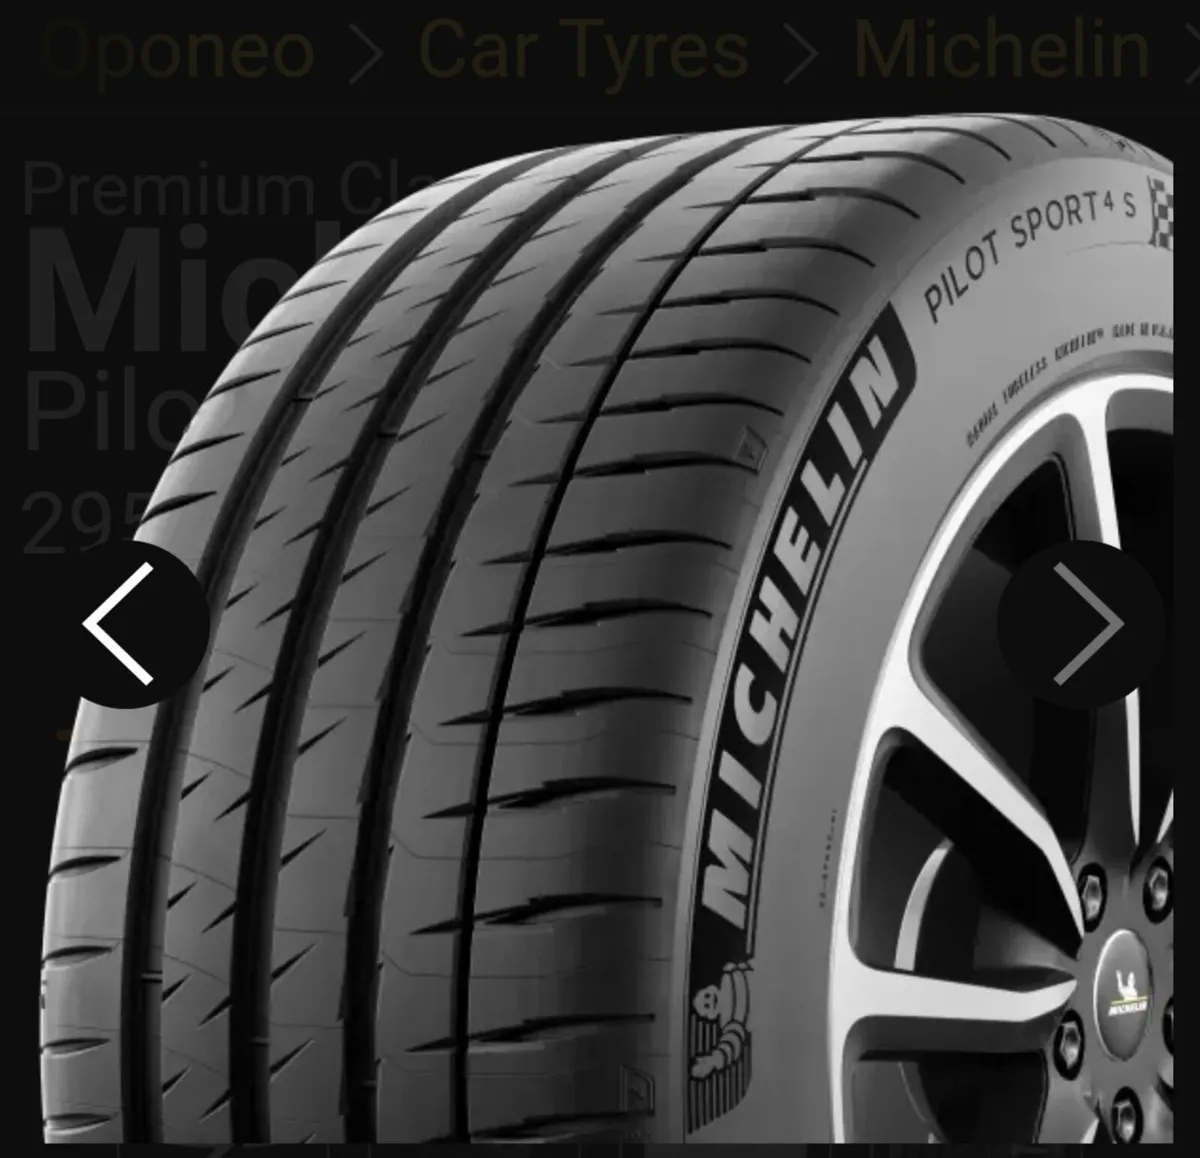 2 x Brand New Premium Class Michelin Pilot Sport 4